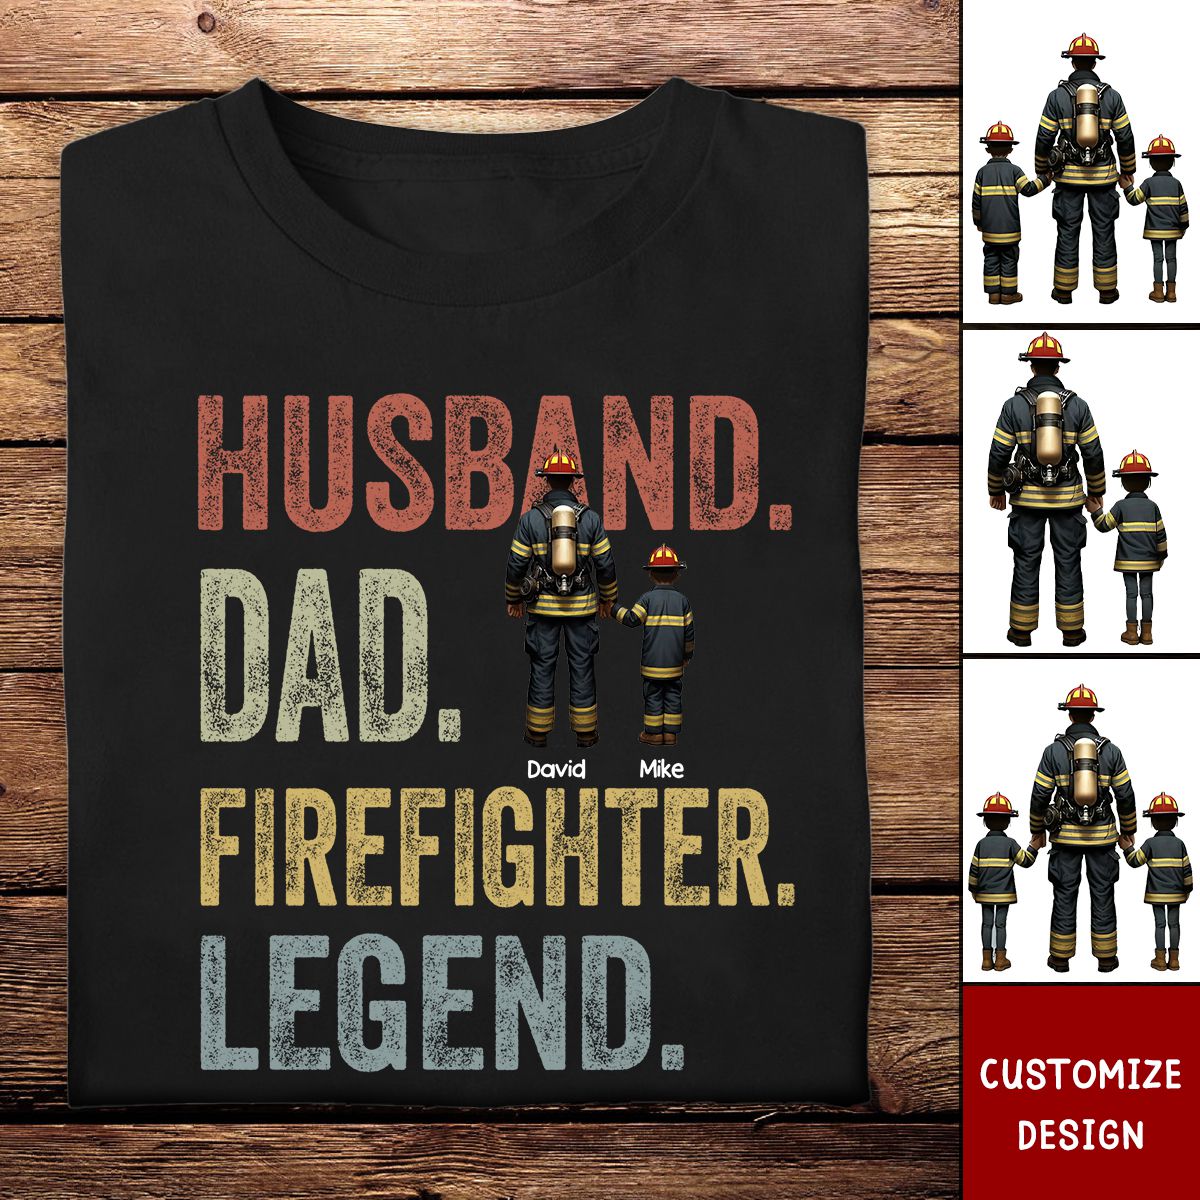 Personalized Husband Dad Fierefighter Legend Firefighter & Chirldren T-shirt